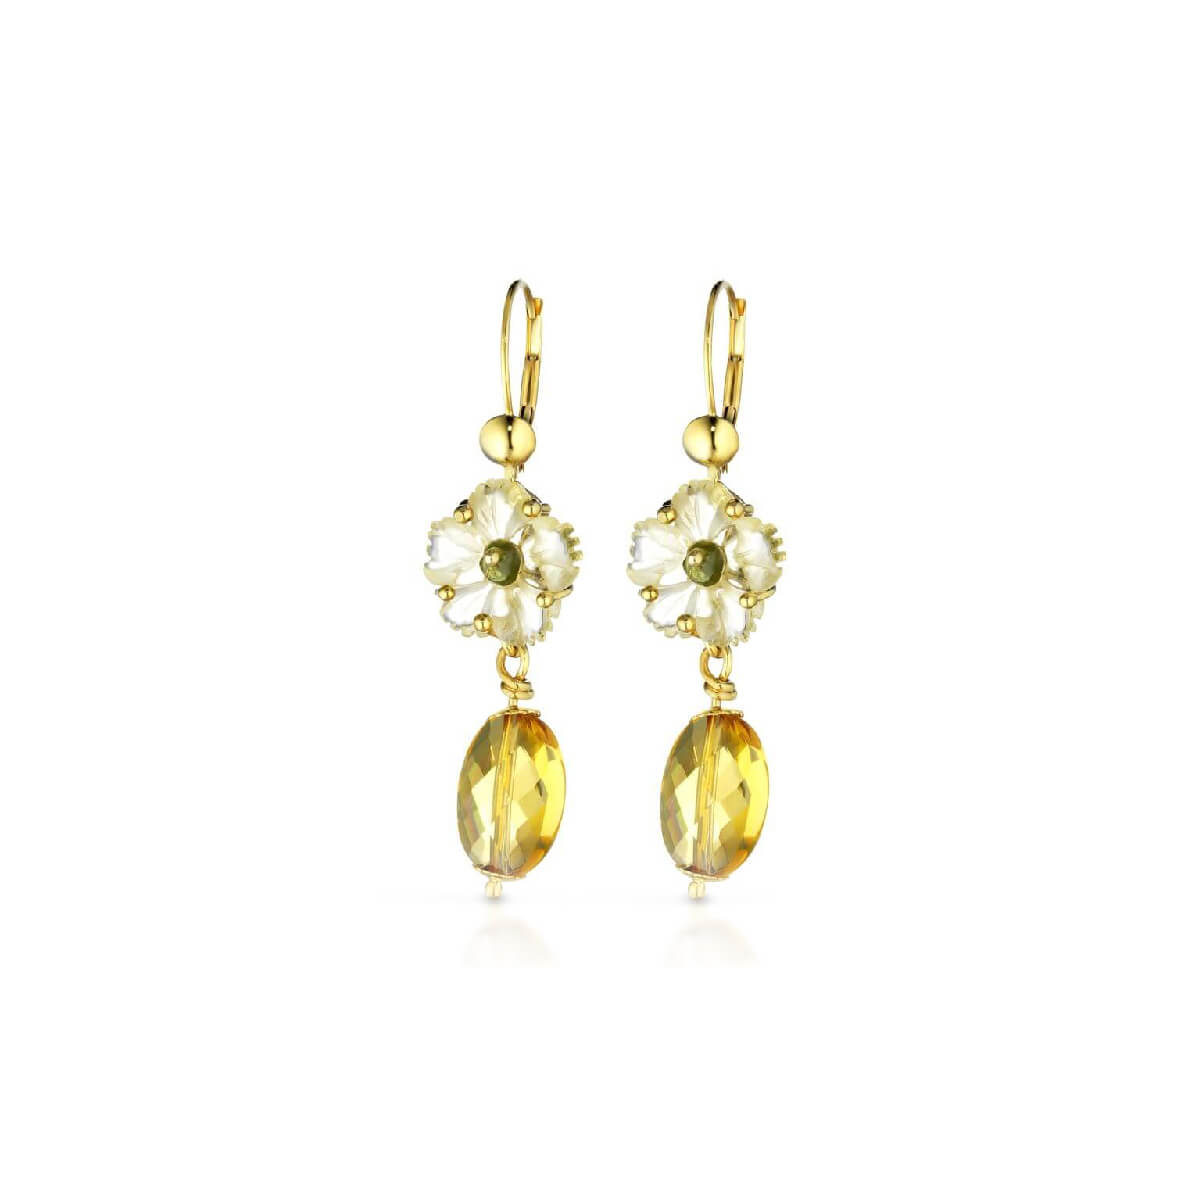 Hydrothermal quartz and tourmaline Flower-En earrings